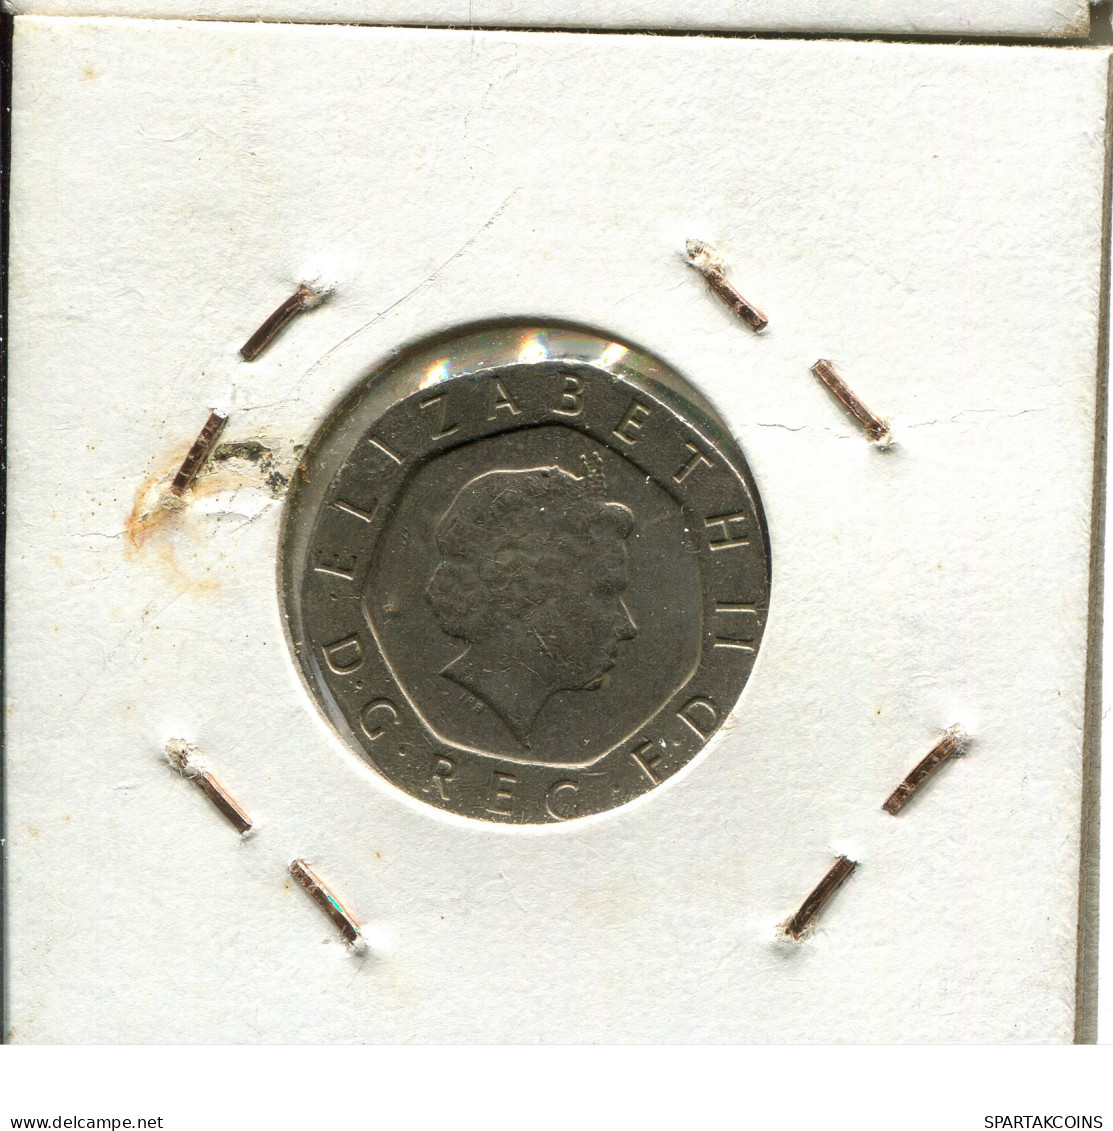 20 PENCE 1999 UK GROßBRITANNIEN GREAT BRITAIN Münze #AW223.D - 20 Pence